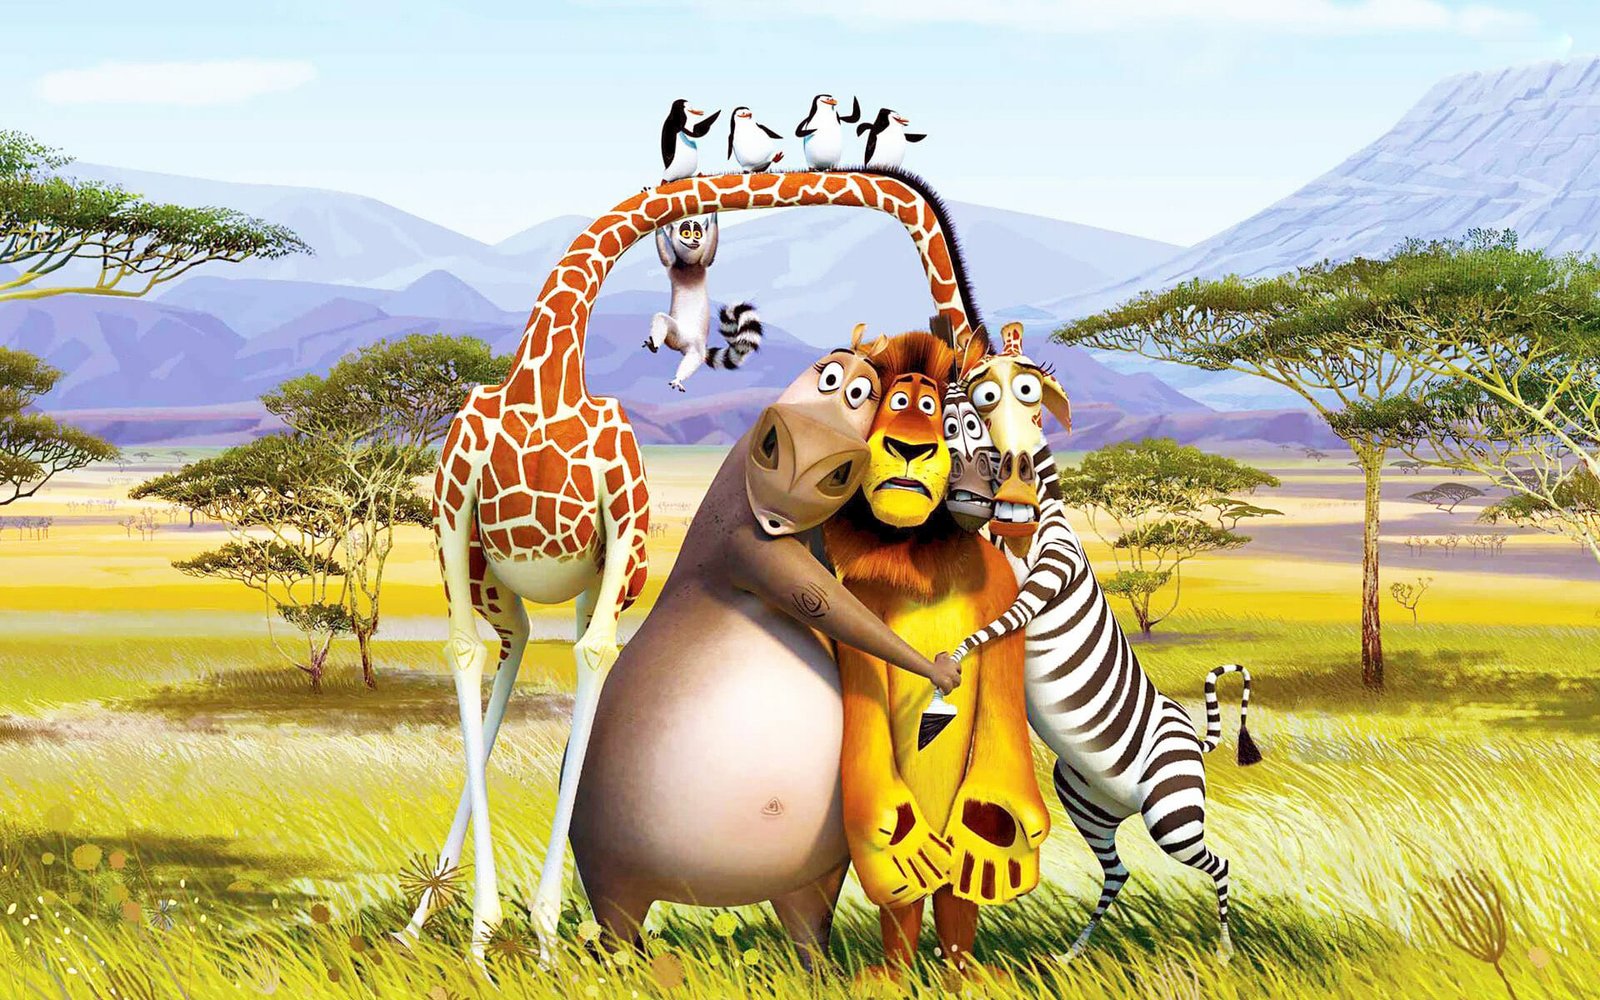 Netflix Animated Movies: Madagascar 3: Europe's Most Wanted